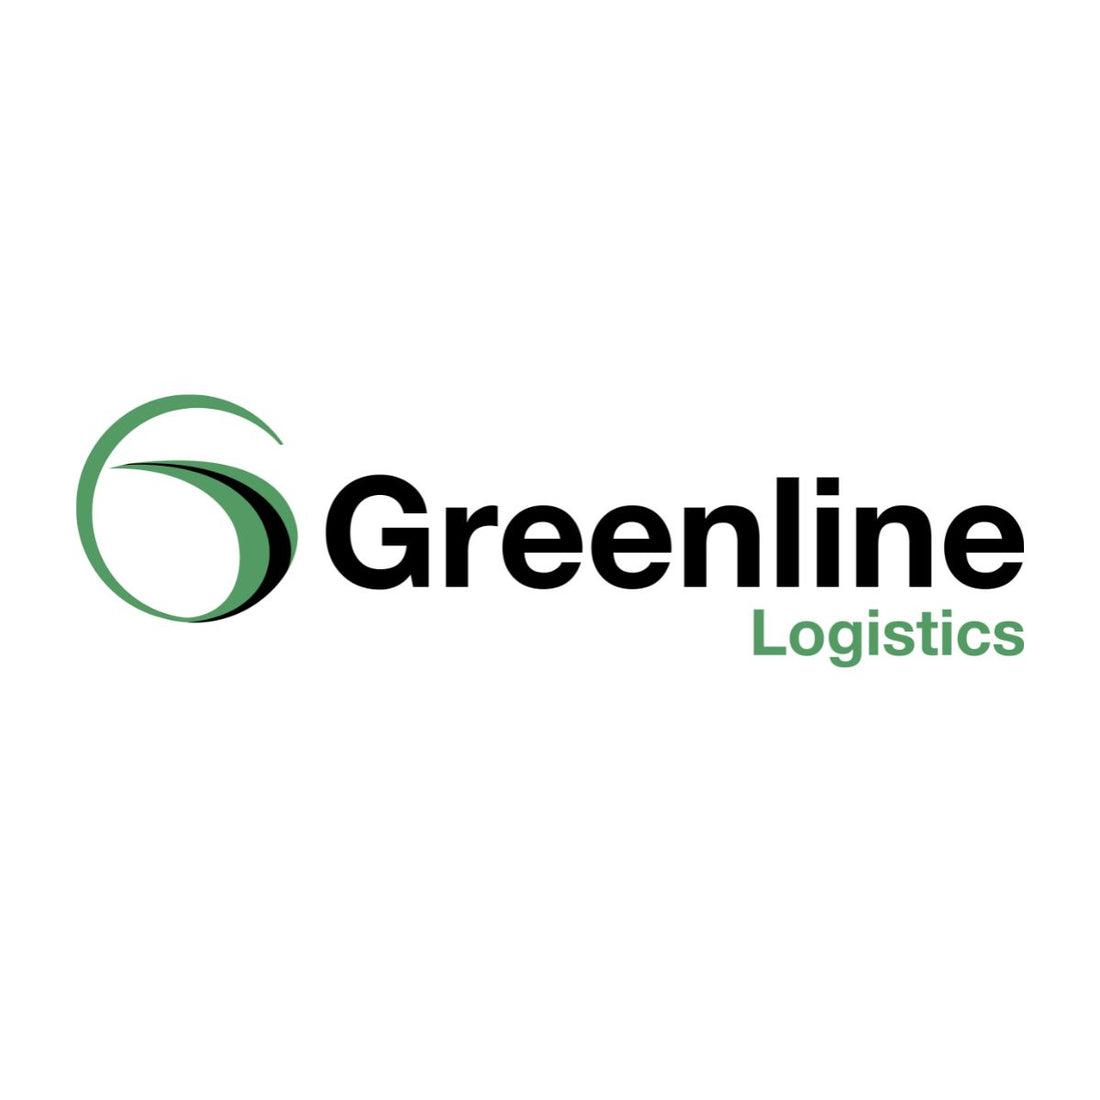 Greenline_DTC_Retail_Logistics_Advice